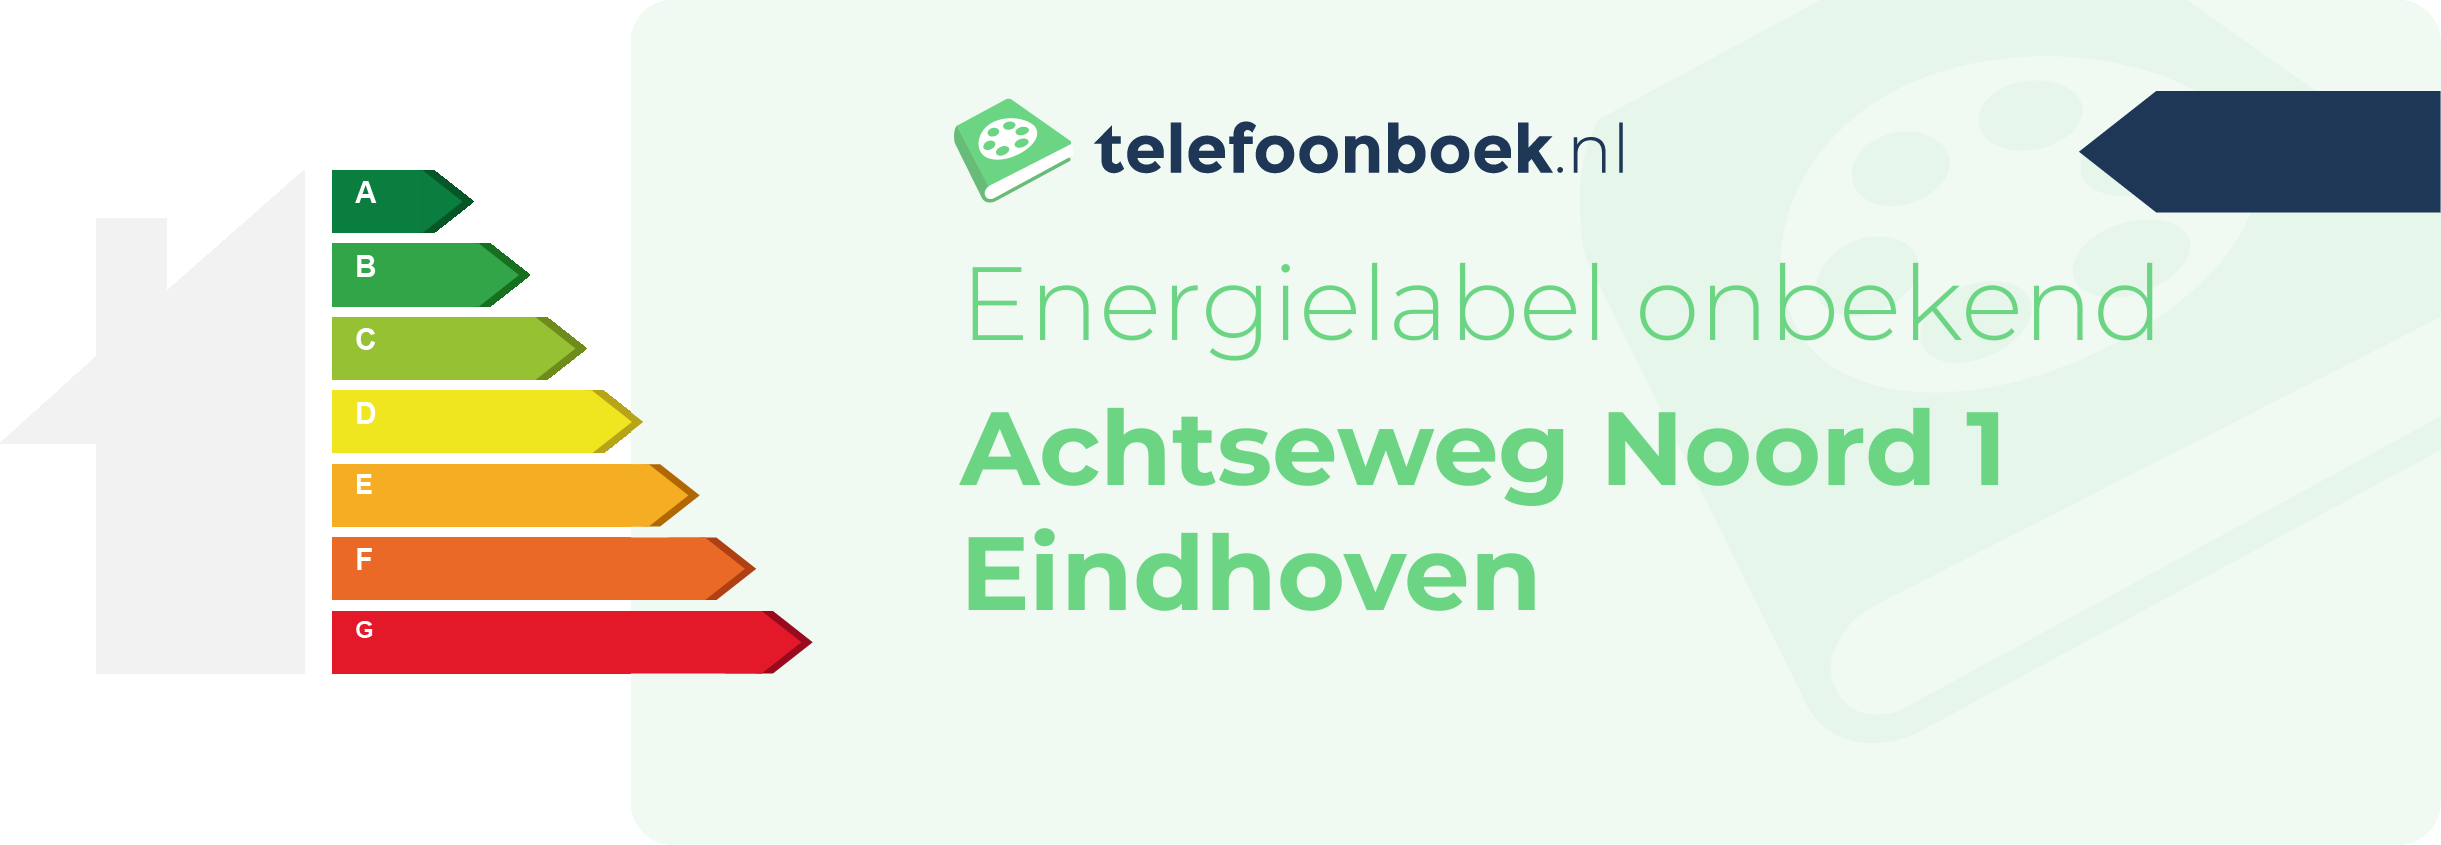 Energielabel Achtseweg Noord 1 Eindhoven